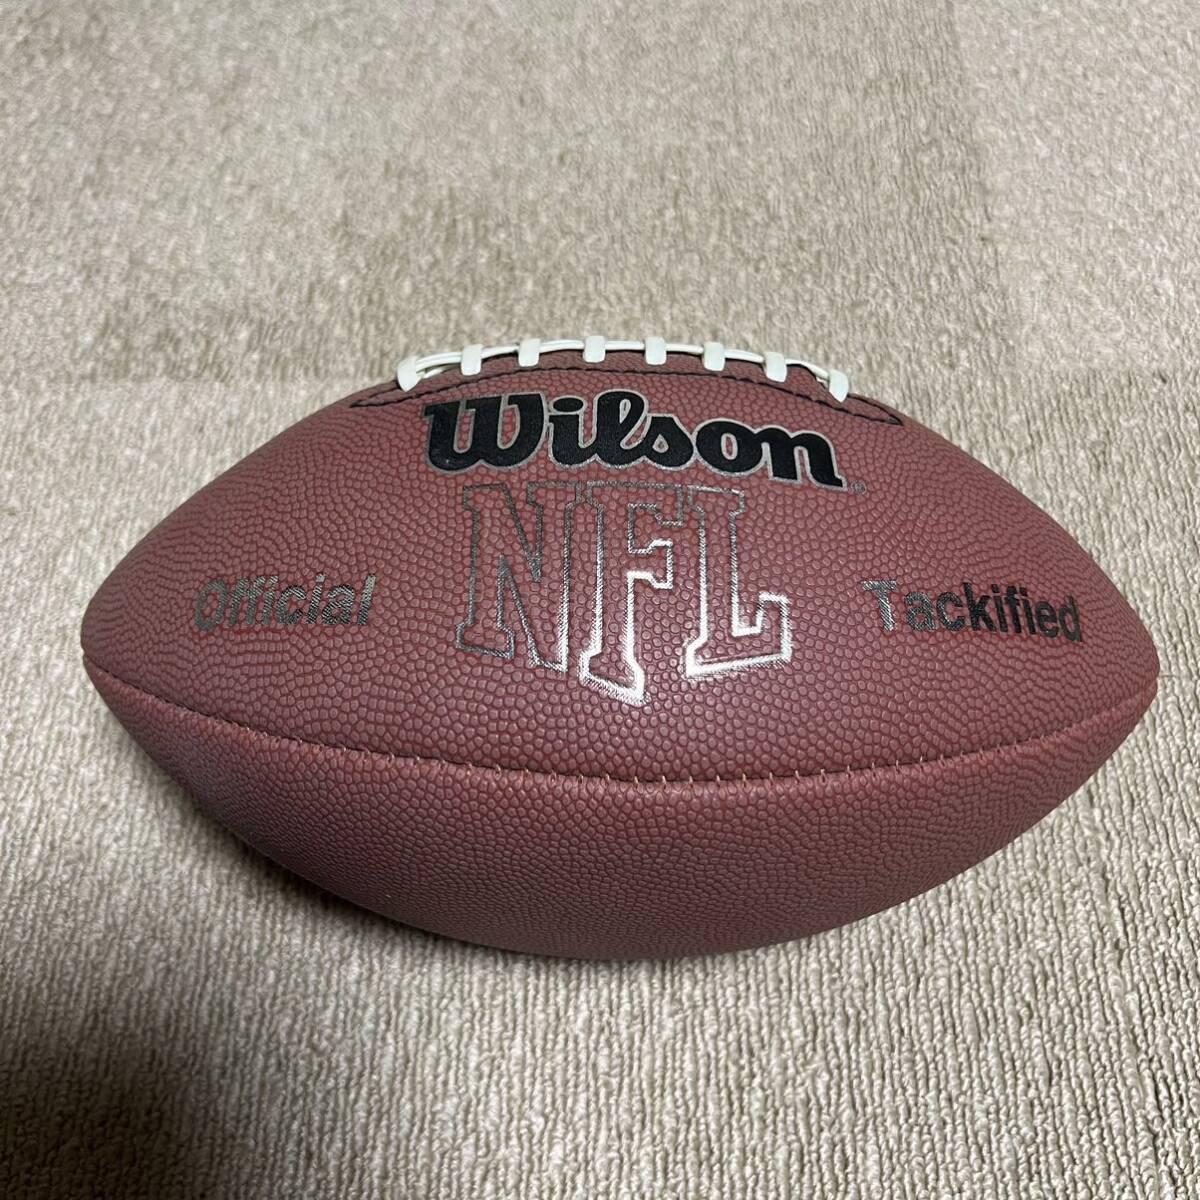 Wilson ウィルソン NFL MVP フットボール オフィシャルサイズの画像1